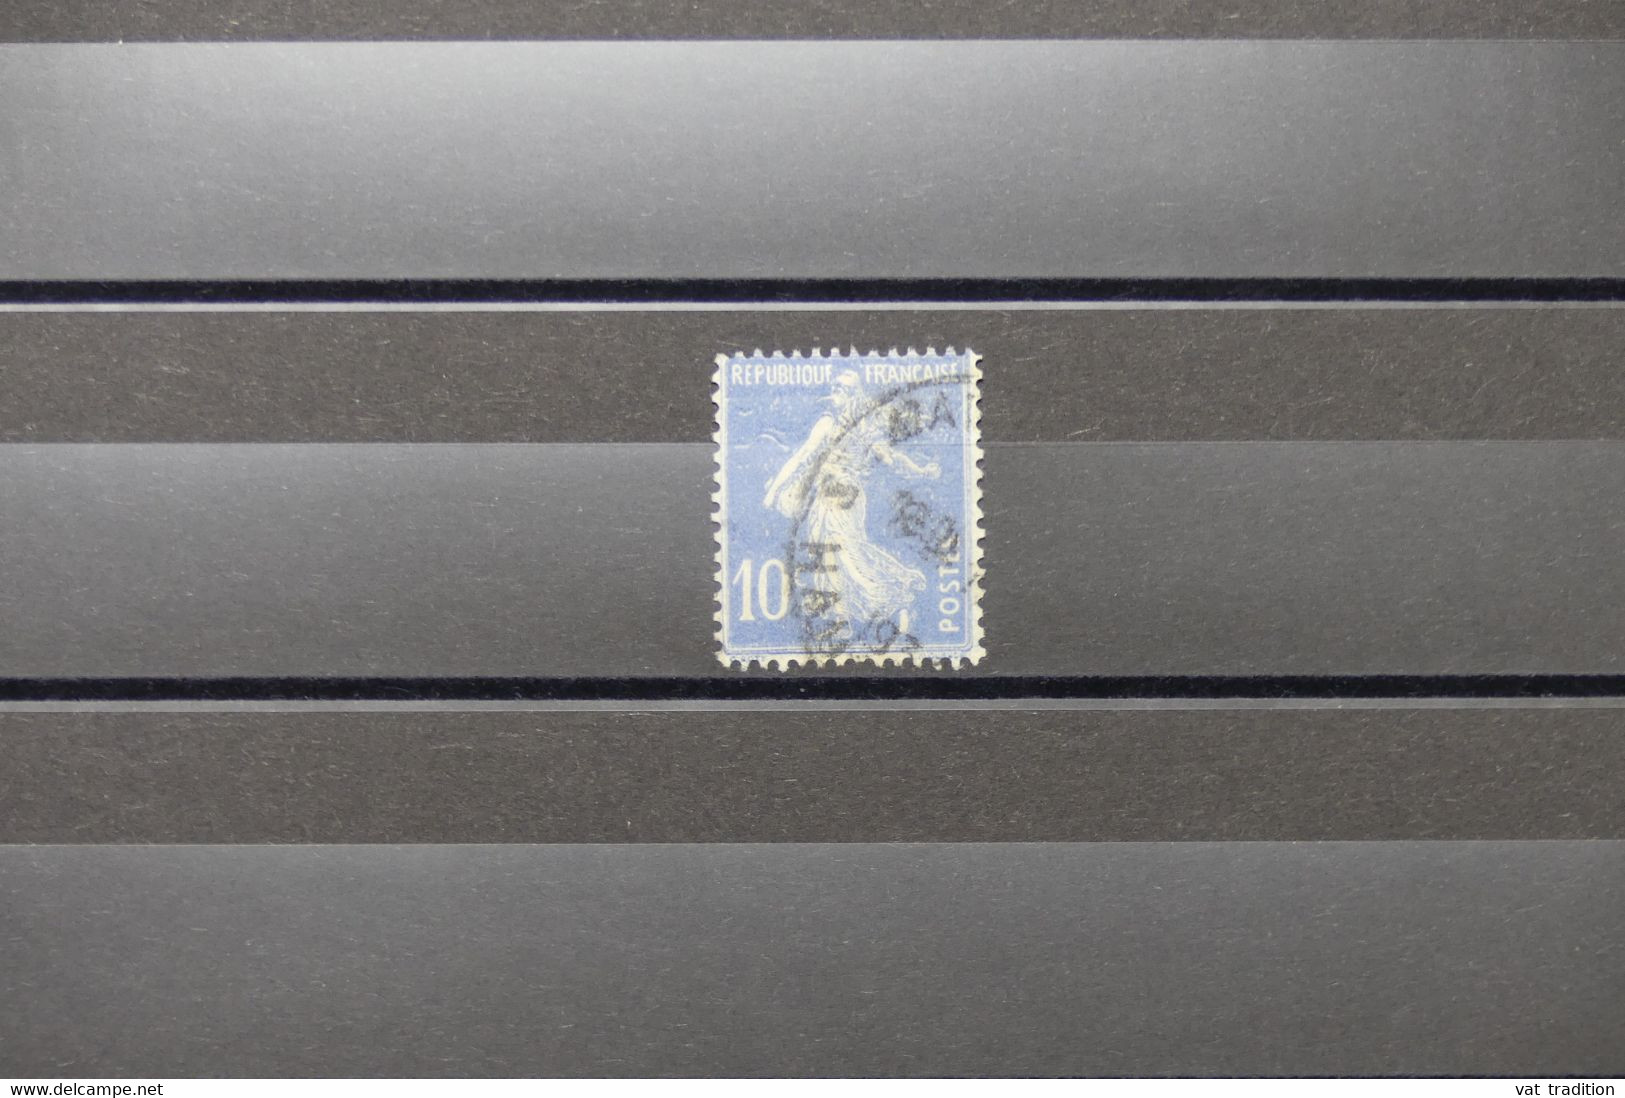 FRANCE - Variété - N° Yvert 279 - Type Semeuse - Avec Chenilles - Oblitéré - L 74032 - Used Stamps